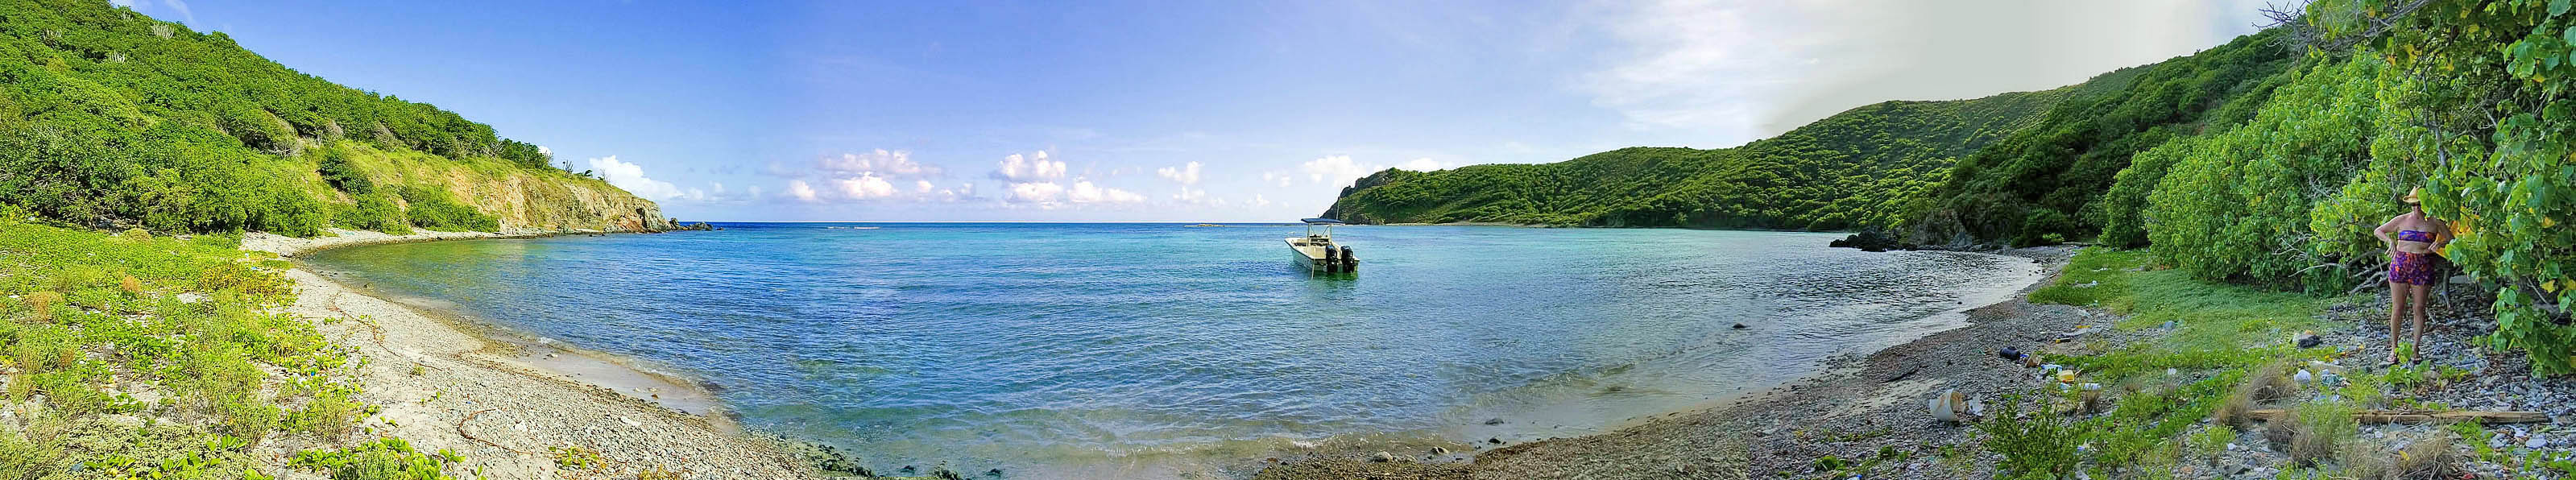 West Money Bay, Norman Island